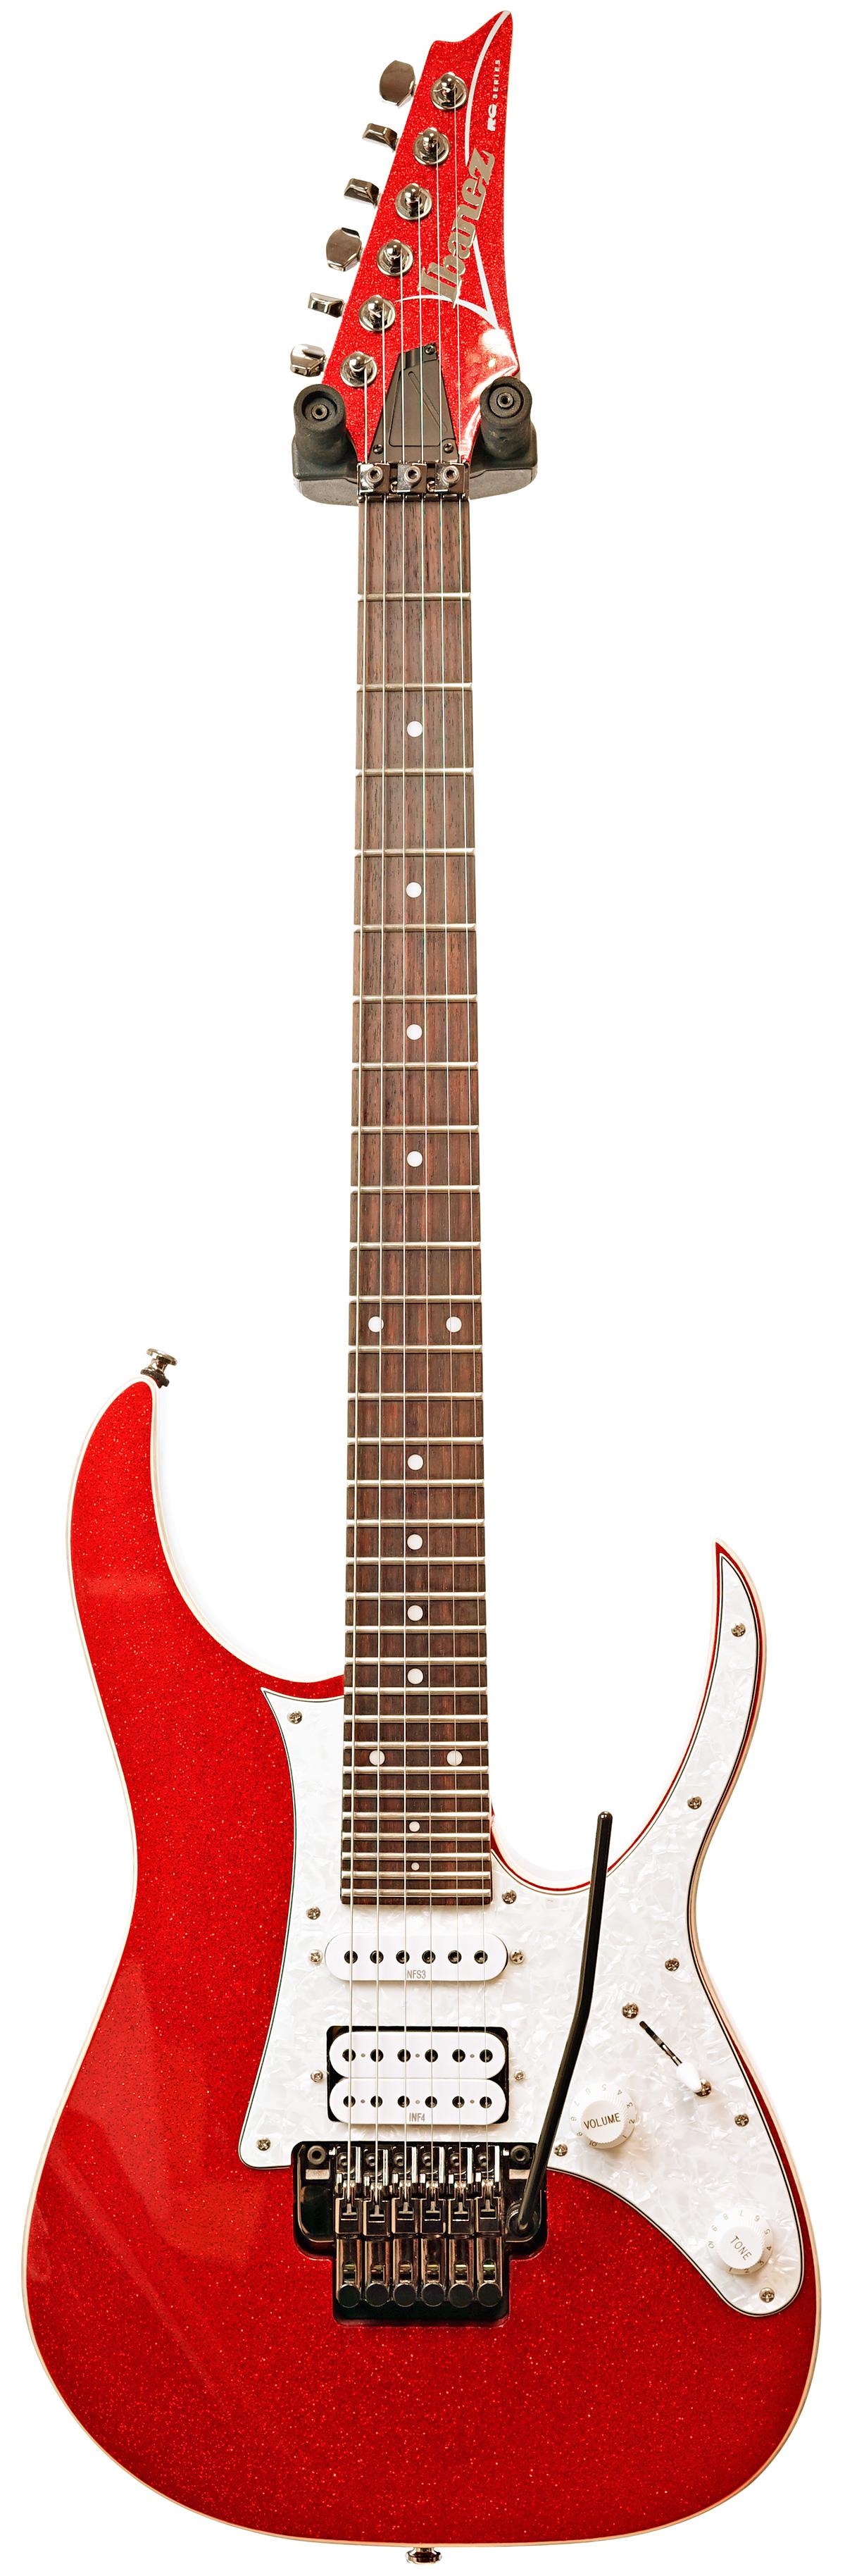 Ibañez - Guitarra Eléctrica RG, Color Roja Metálica Mod.RG550XH-RSP_22